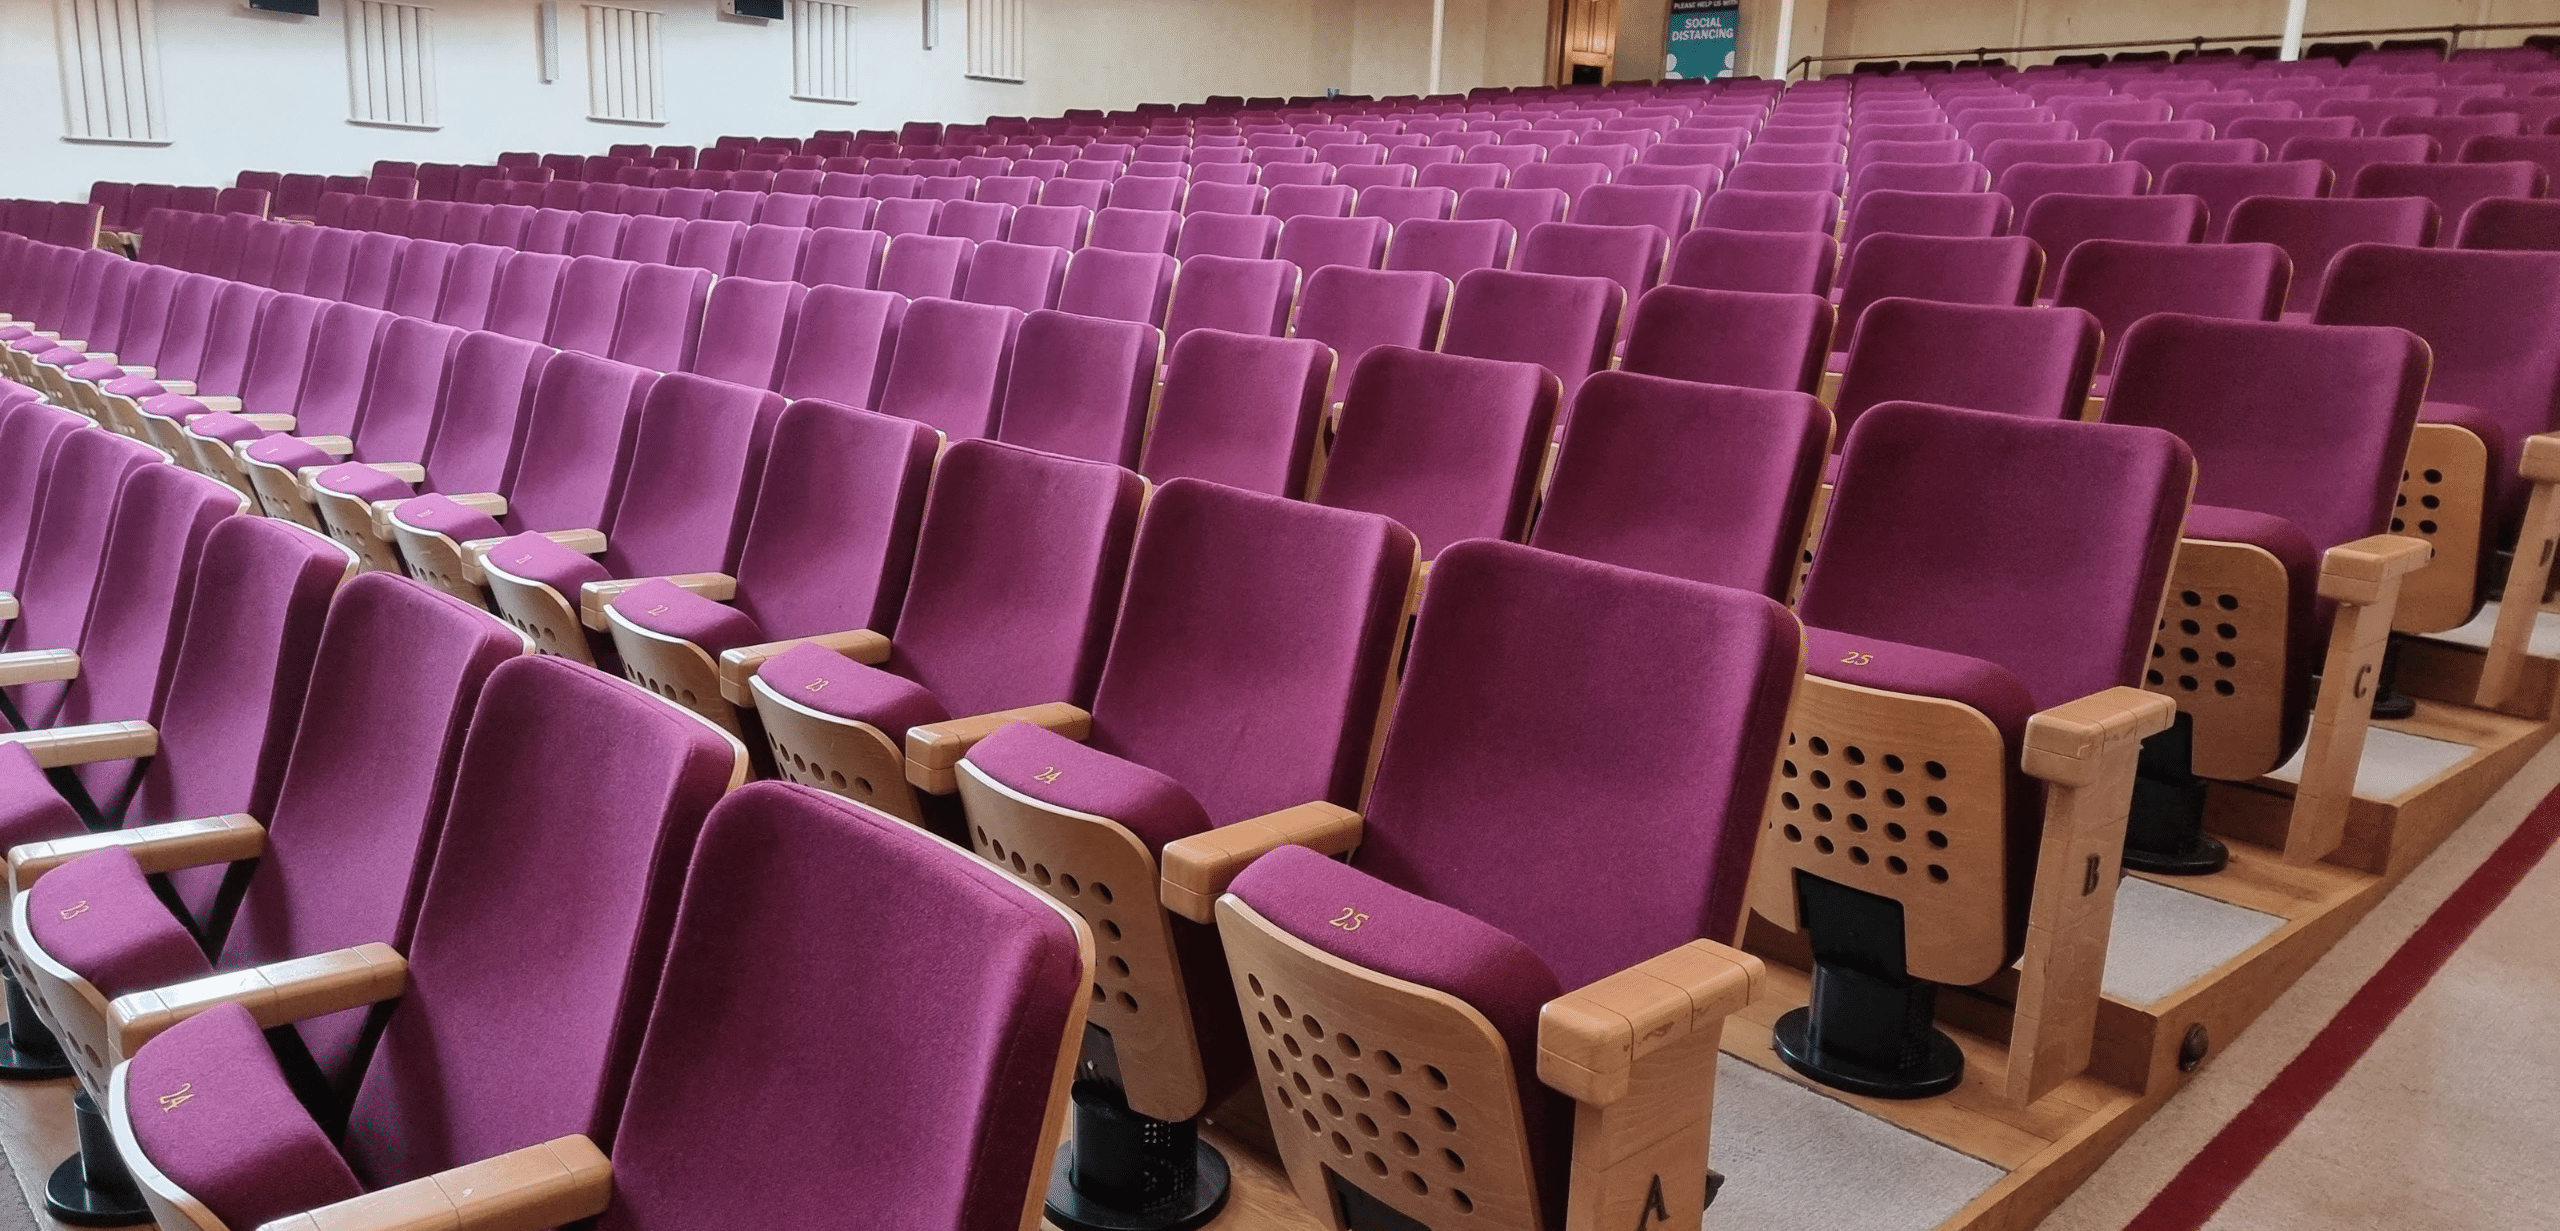 A large auditorium with rows of purple auditorium seating